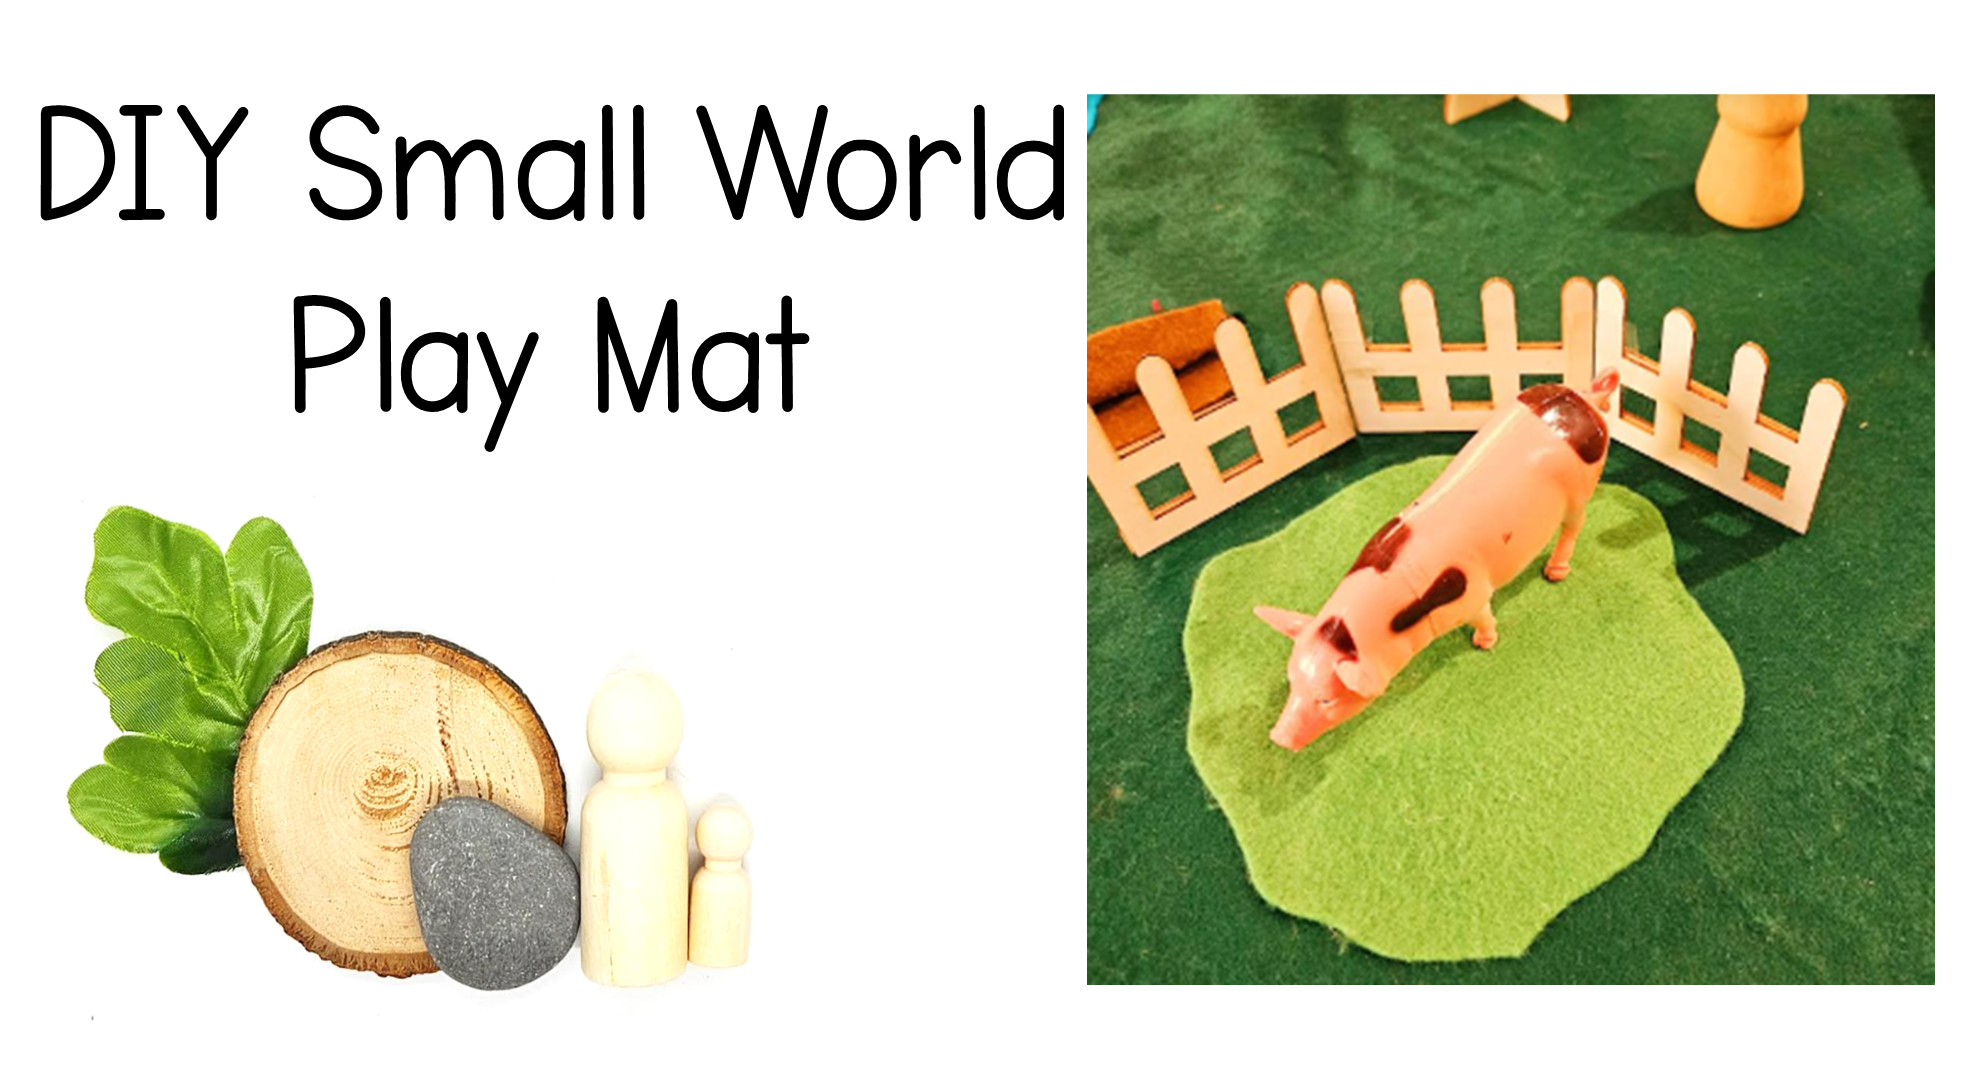 DIY Small World Play Mat